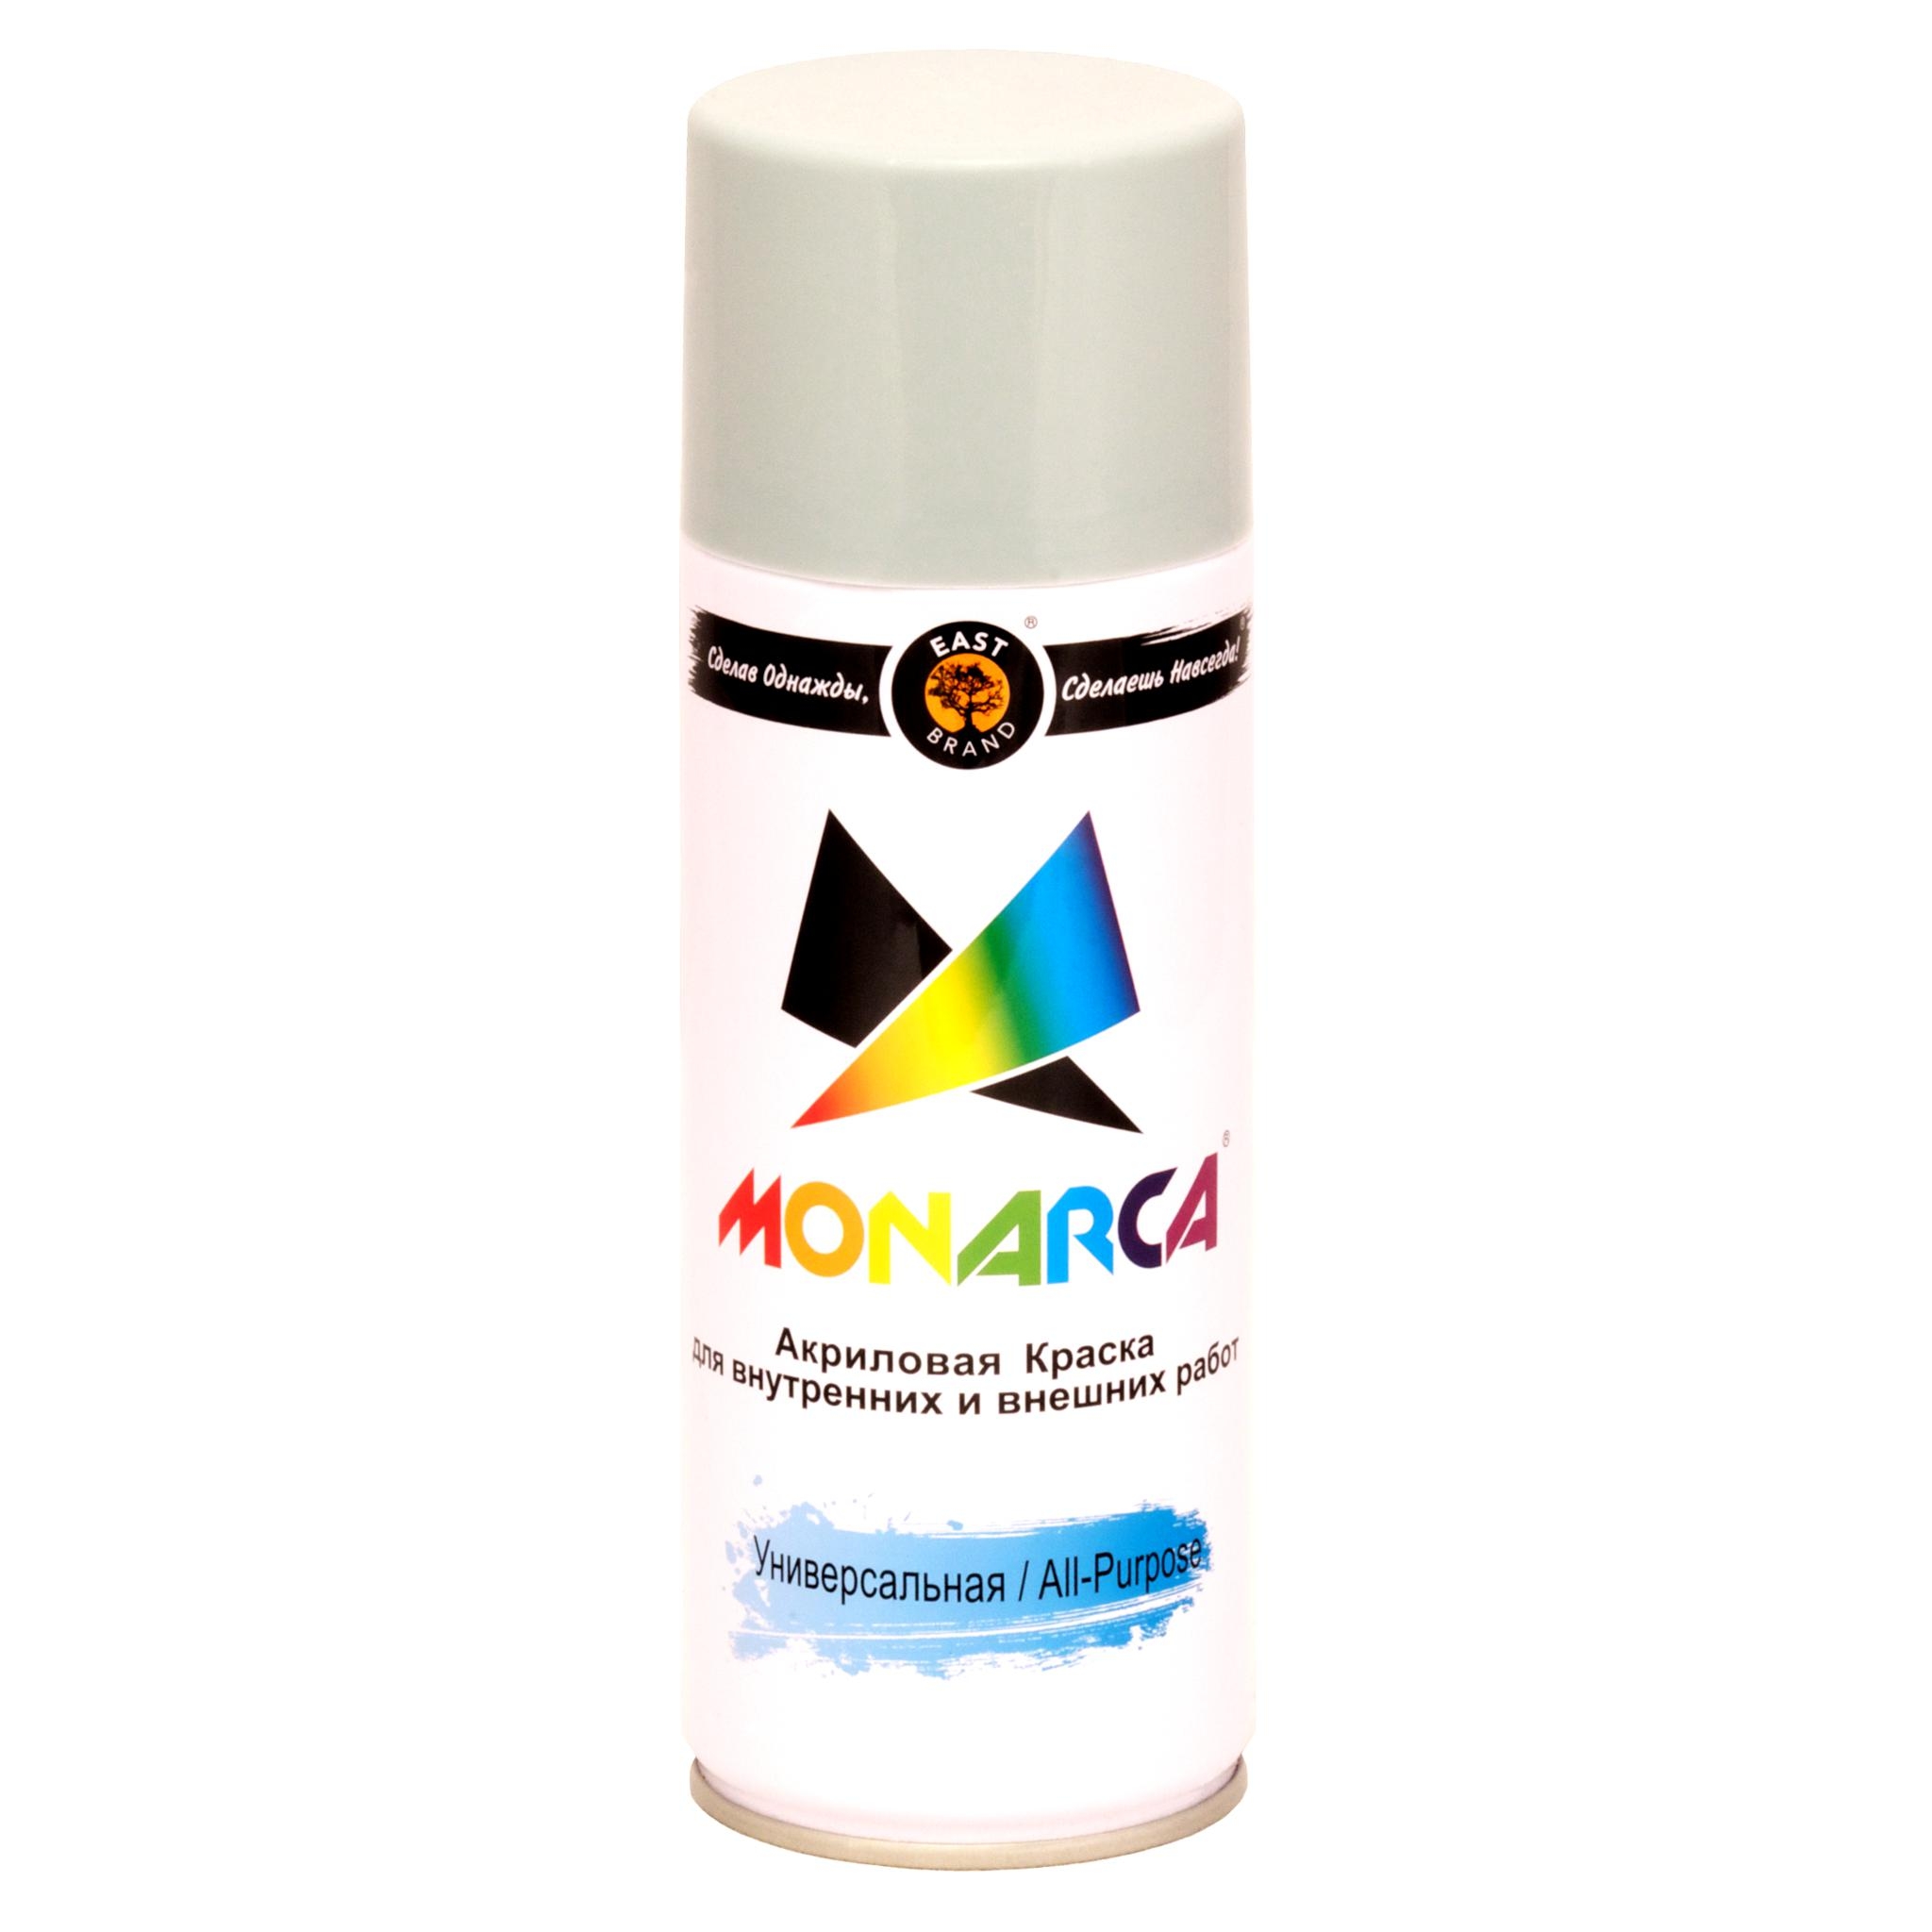 Аэрозольная краска MONARCA 17004 RAL7004 520 мл сигнальный серая аэрозольная термостойкая краска monarca